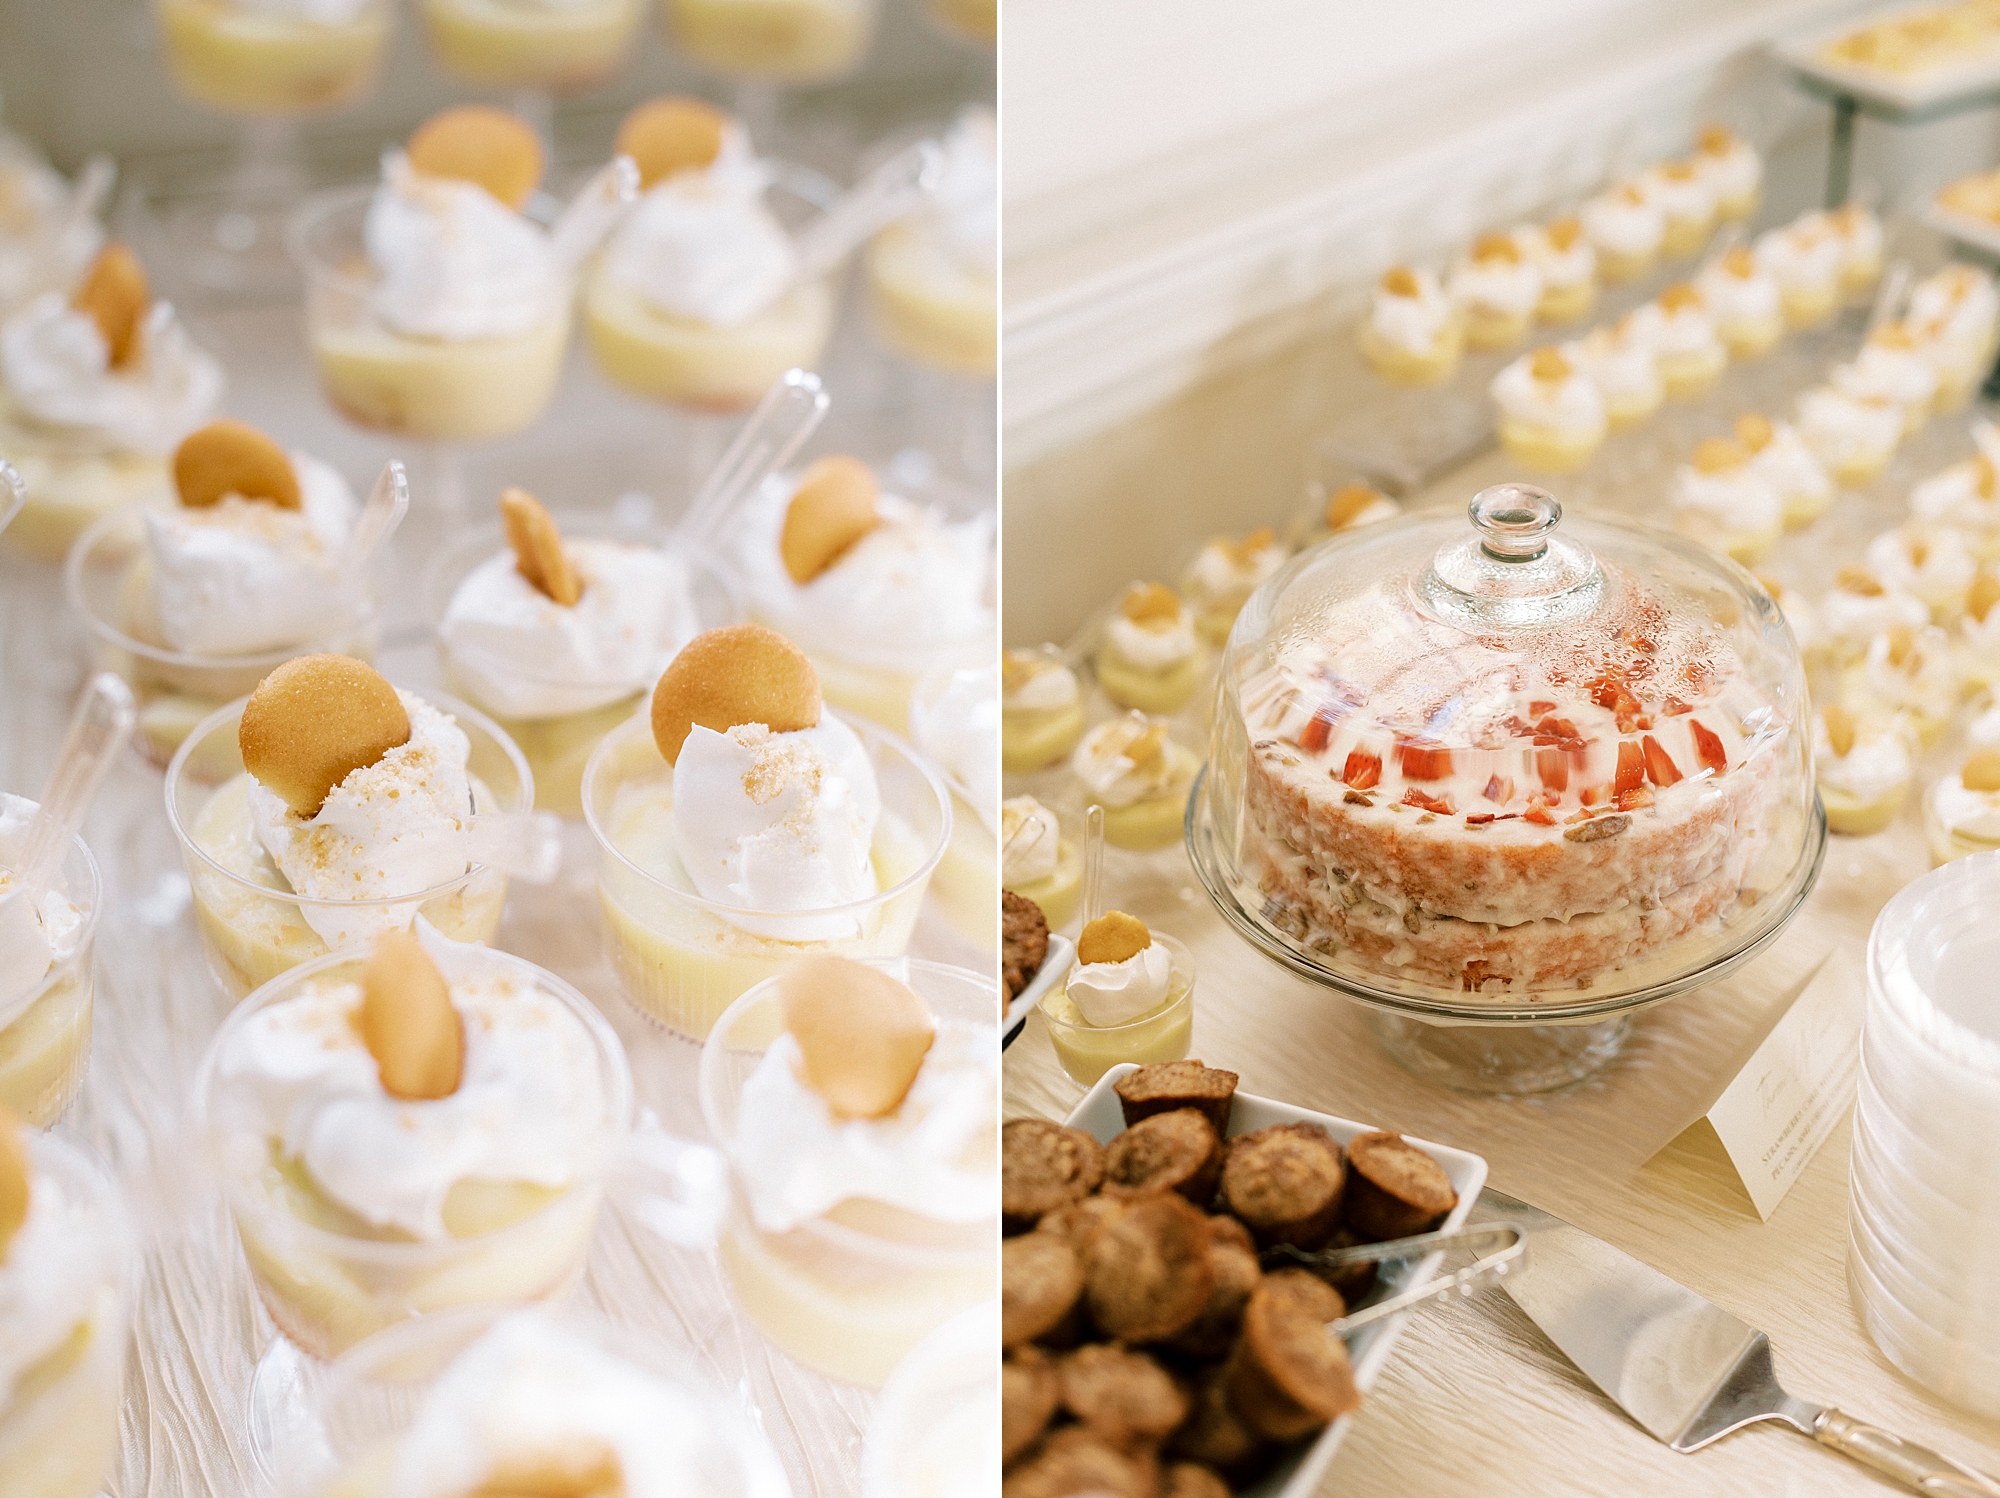 dessert display table for Separk Mansion wedding reception 